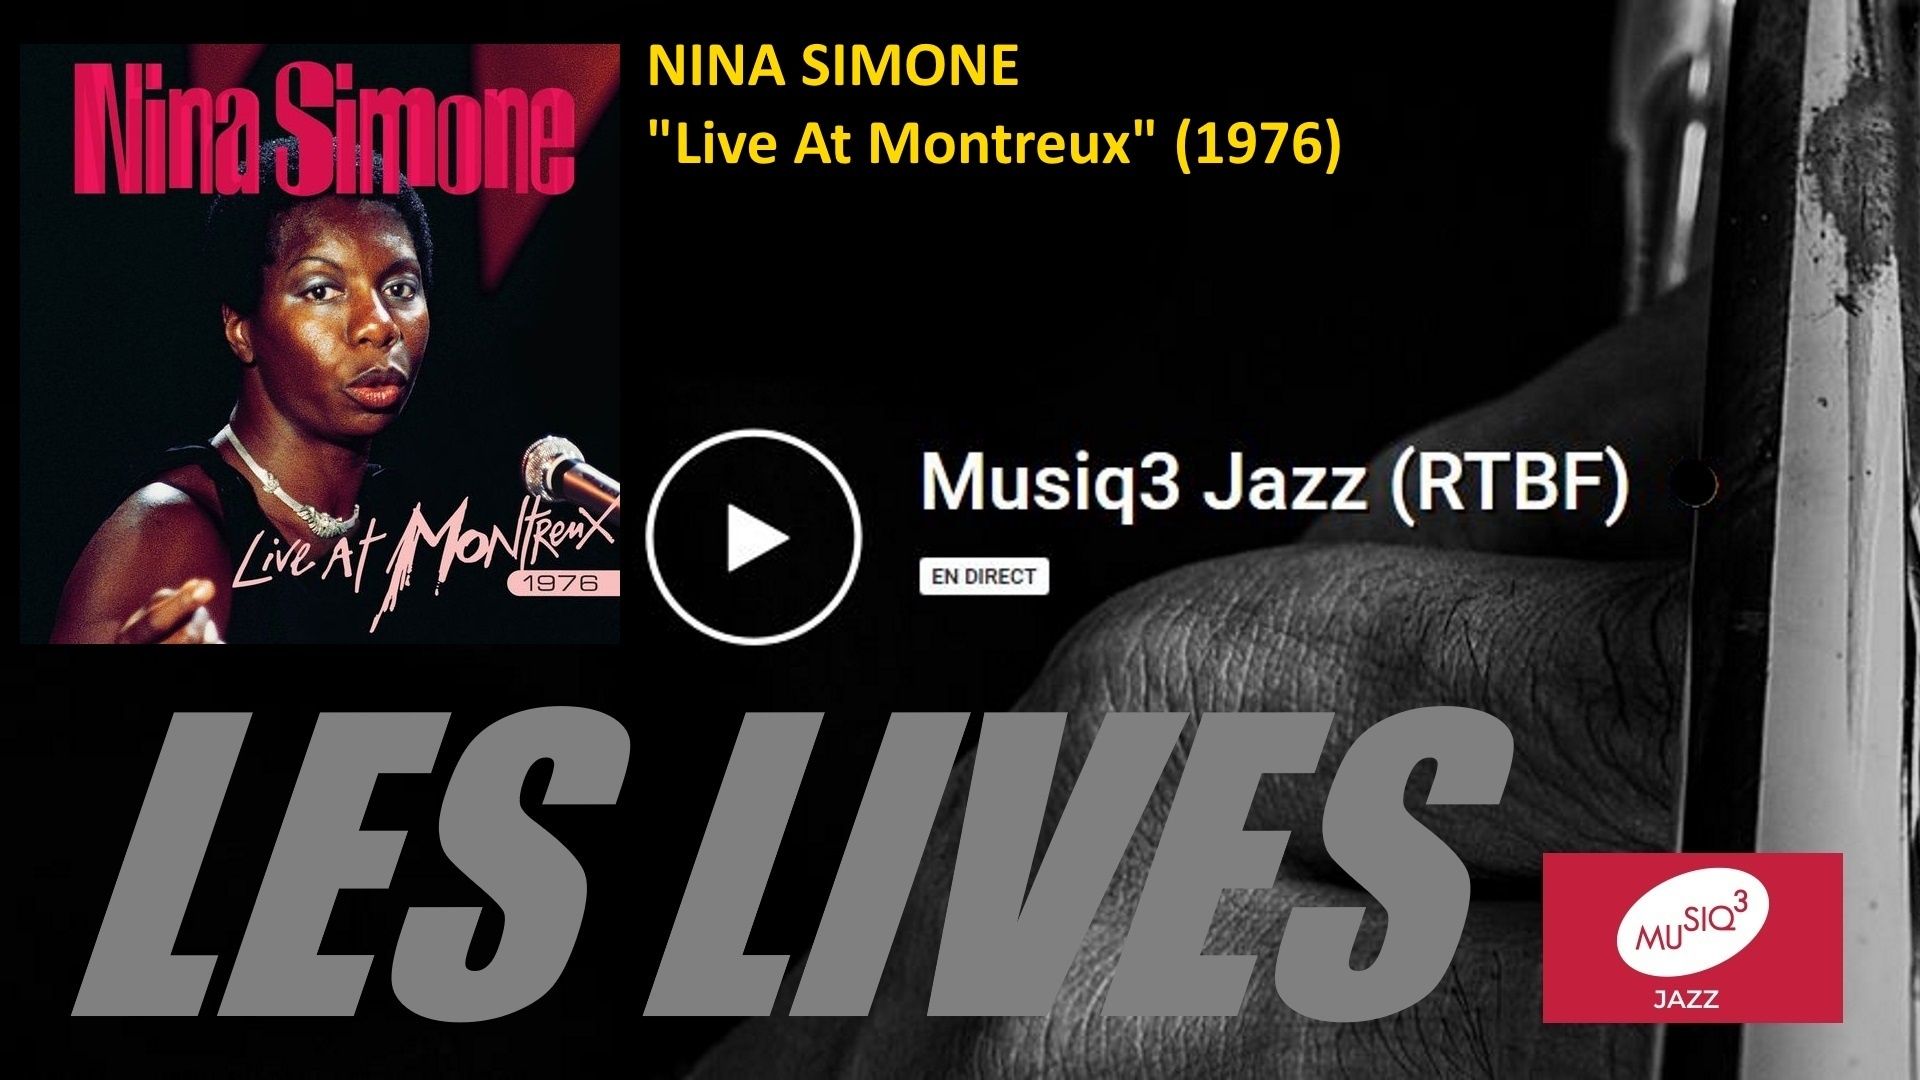 Les lives : Nina Simone ("Live At Montreux", 1976)